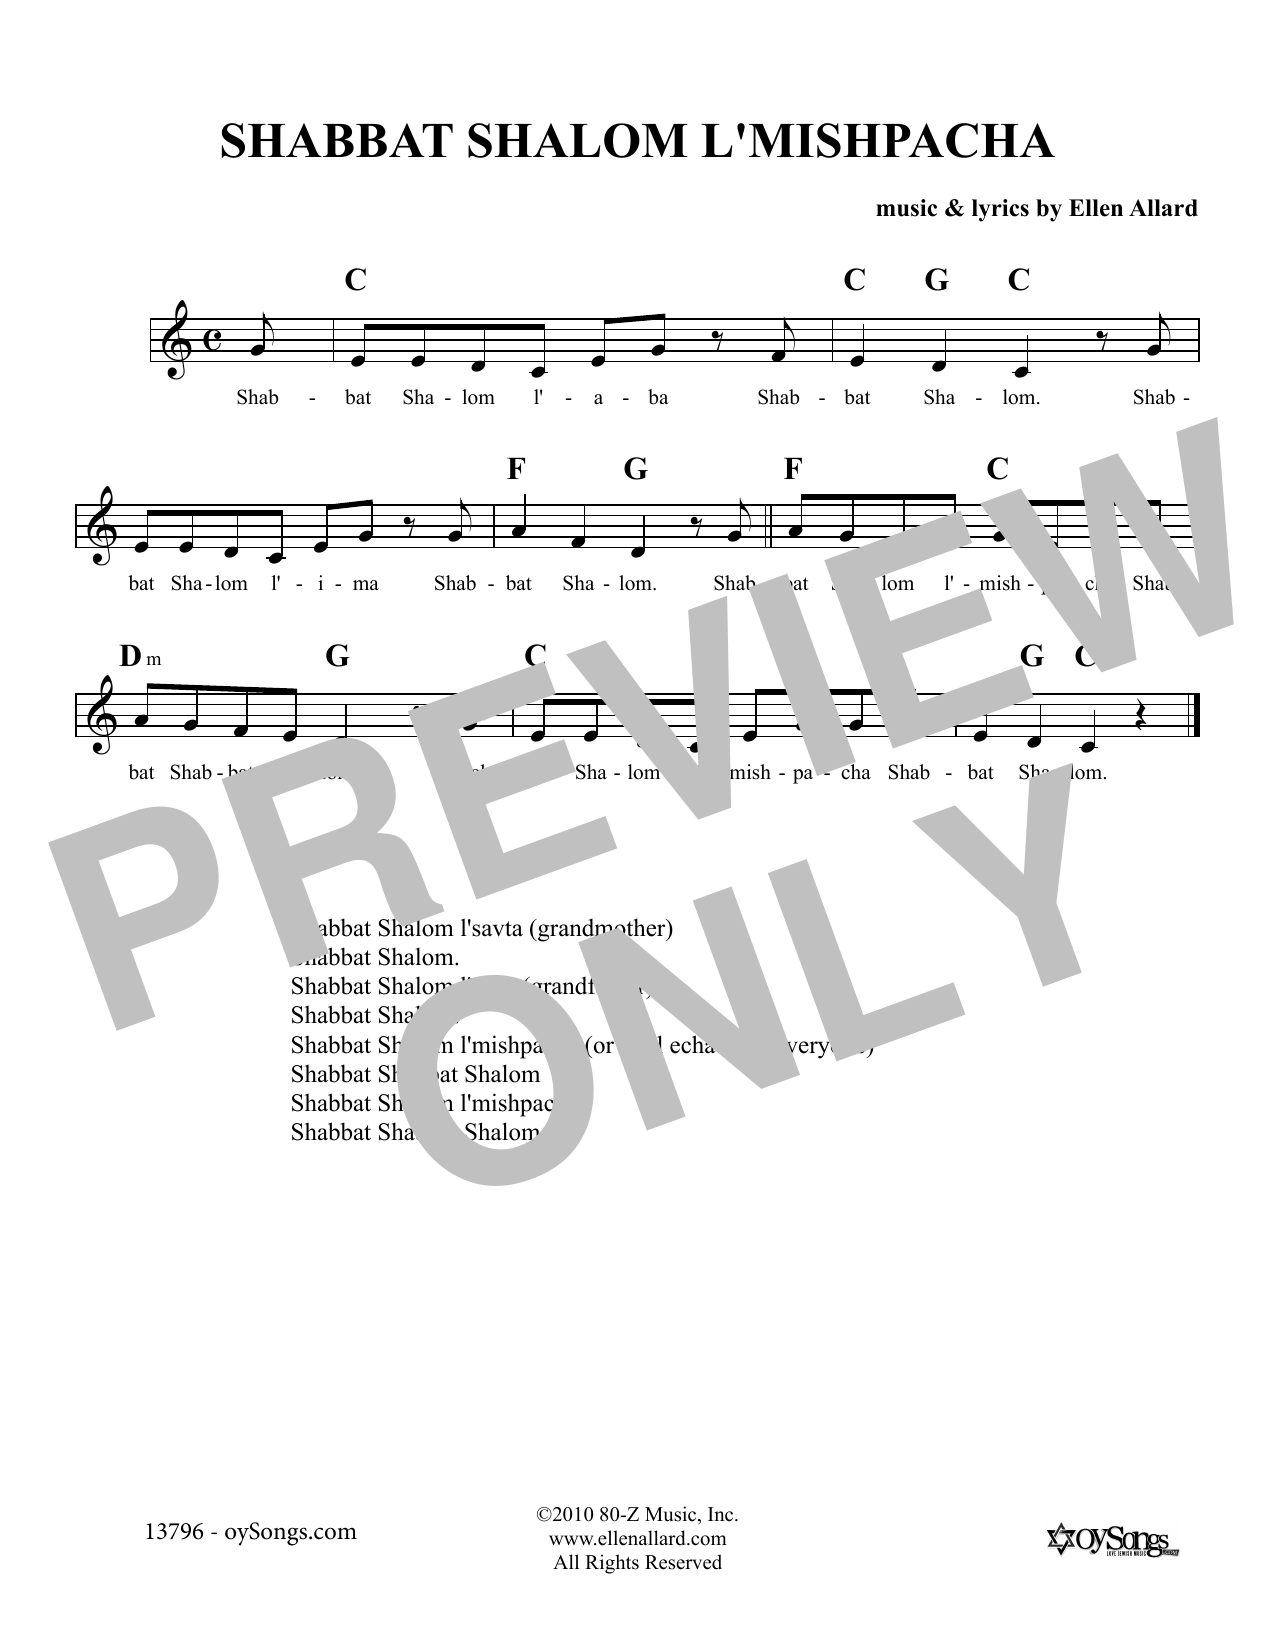 Download Ellen Allard Shabbat Shalom L'Mishpacha Sheet Music and learn how to play Melody Line, Lyrics & Chords PDF digital score in minutes